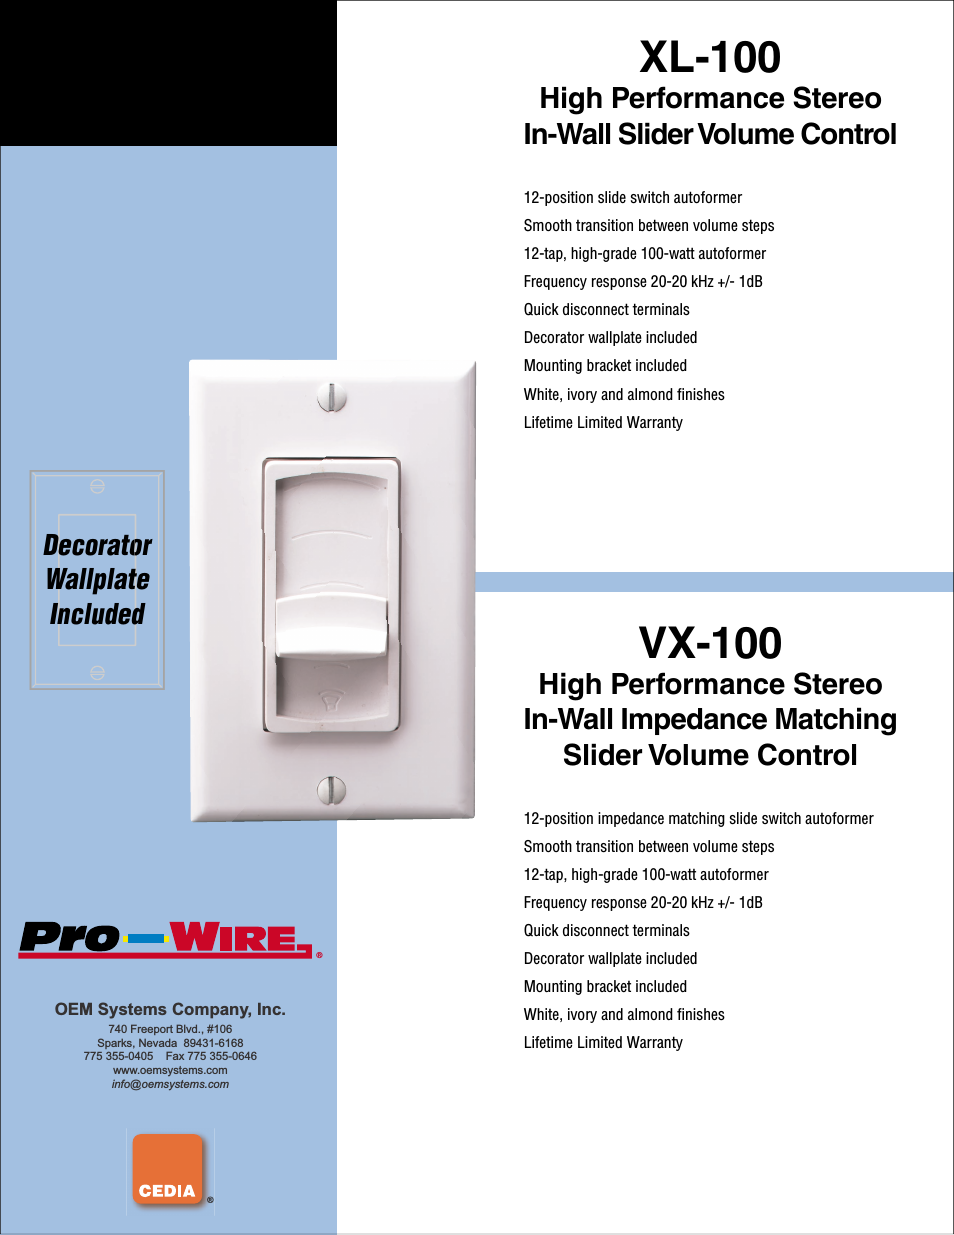 In-Wall SliderVolume Control VX-100